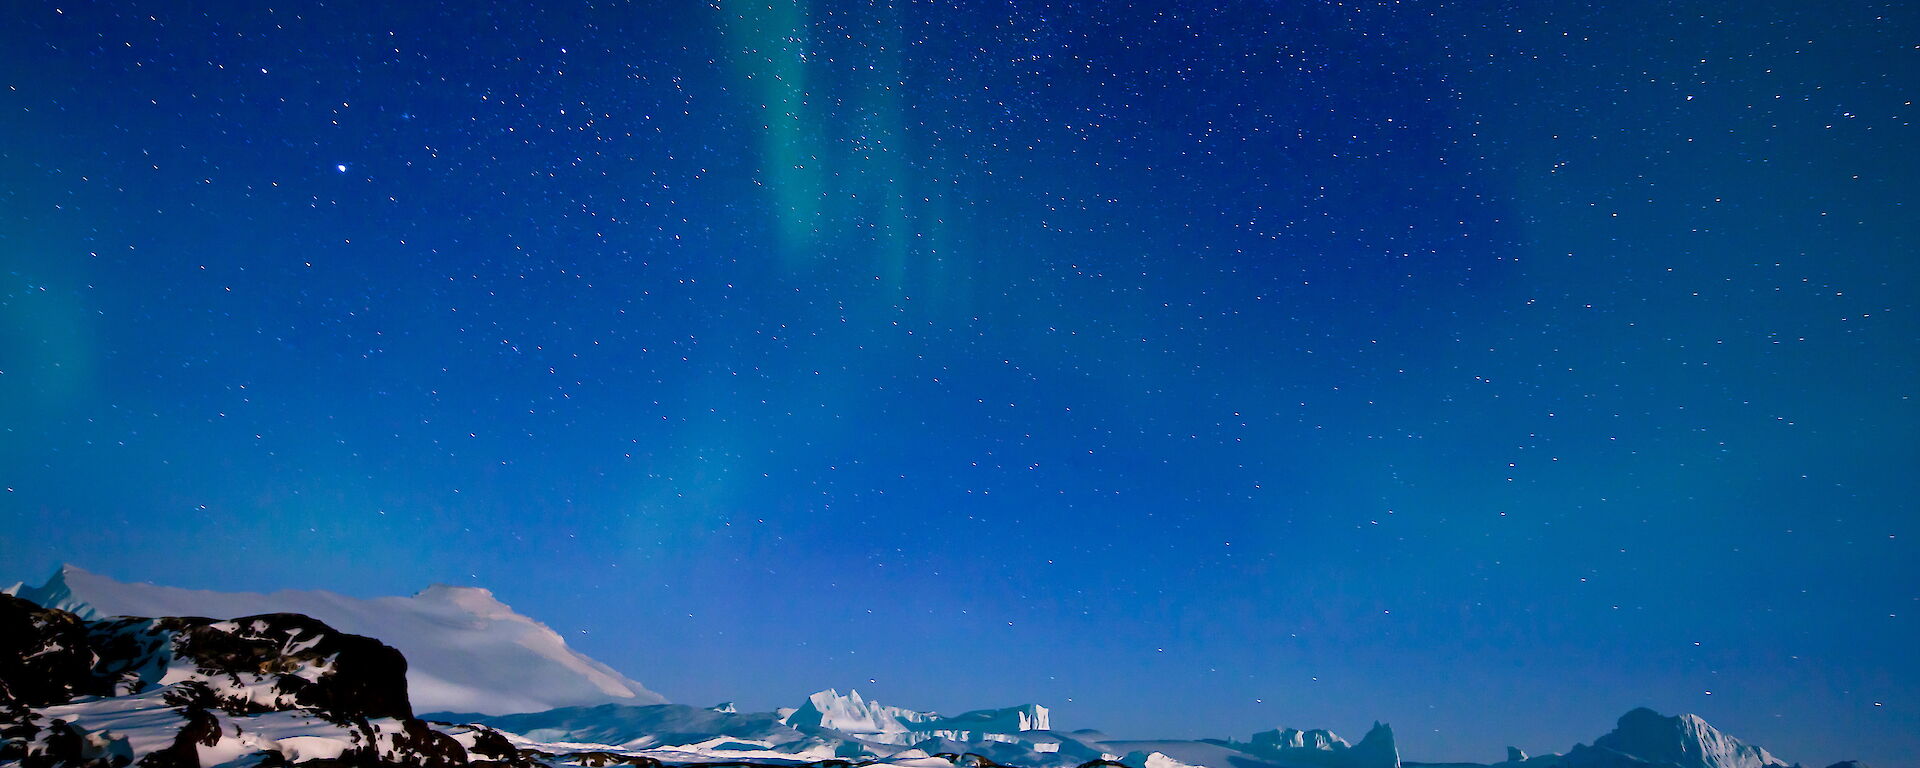 Antarctic night sky